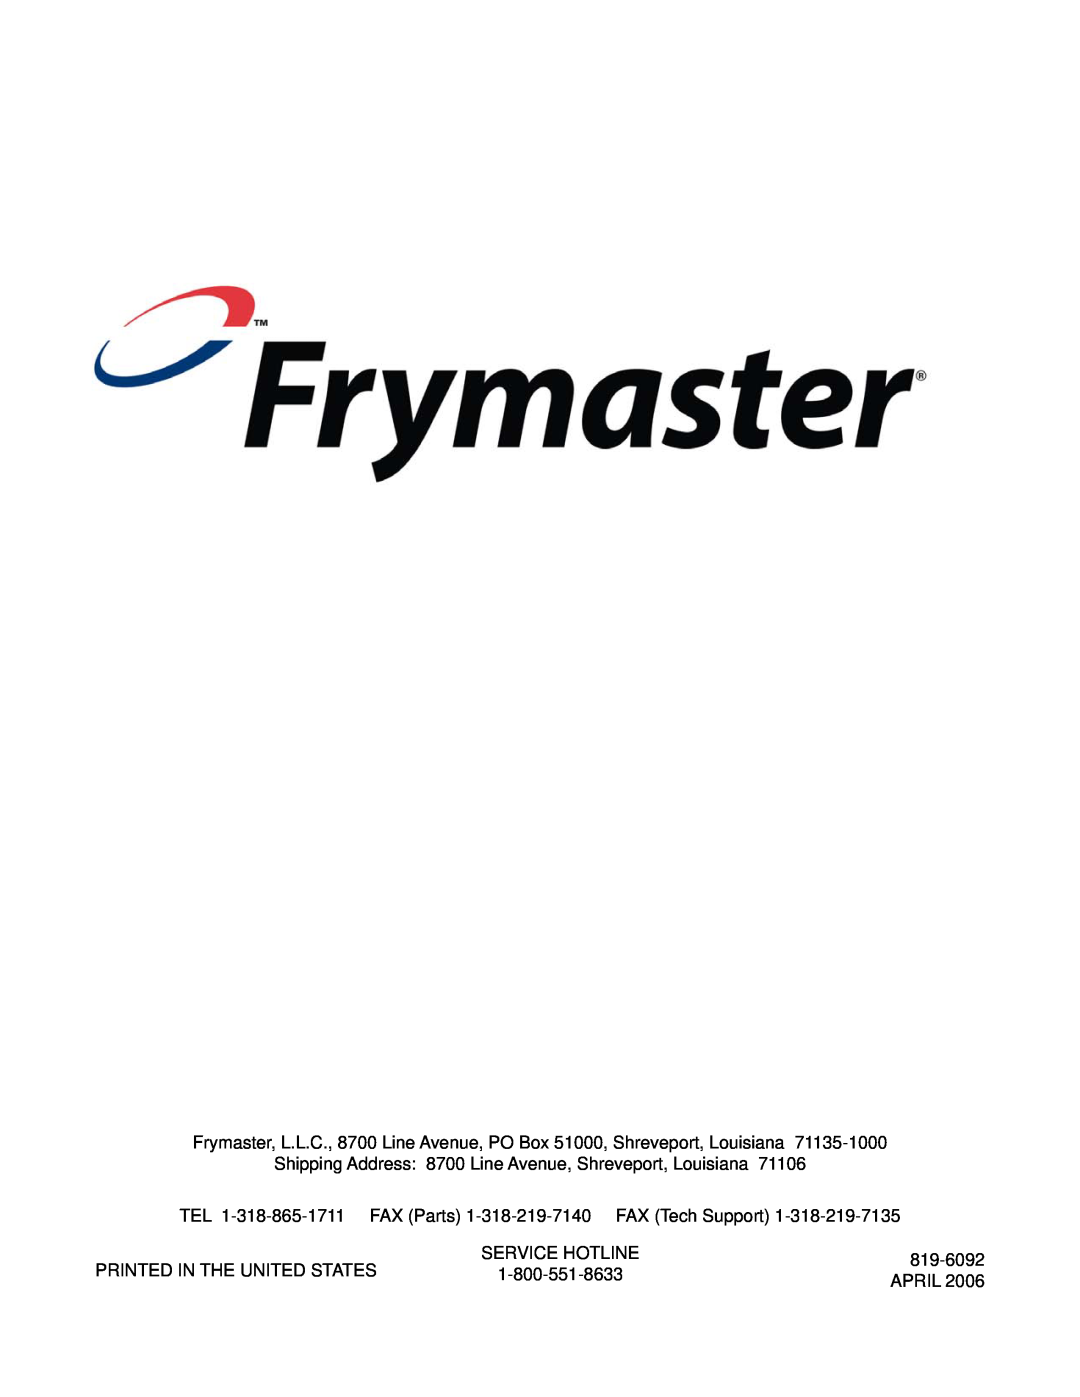 Frymaster 35, 45 Shipping Address 8700 Line Avenue, Shreveport, Louisiana, Printed In The United States, Service Hotline 